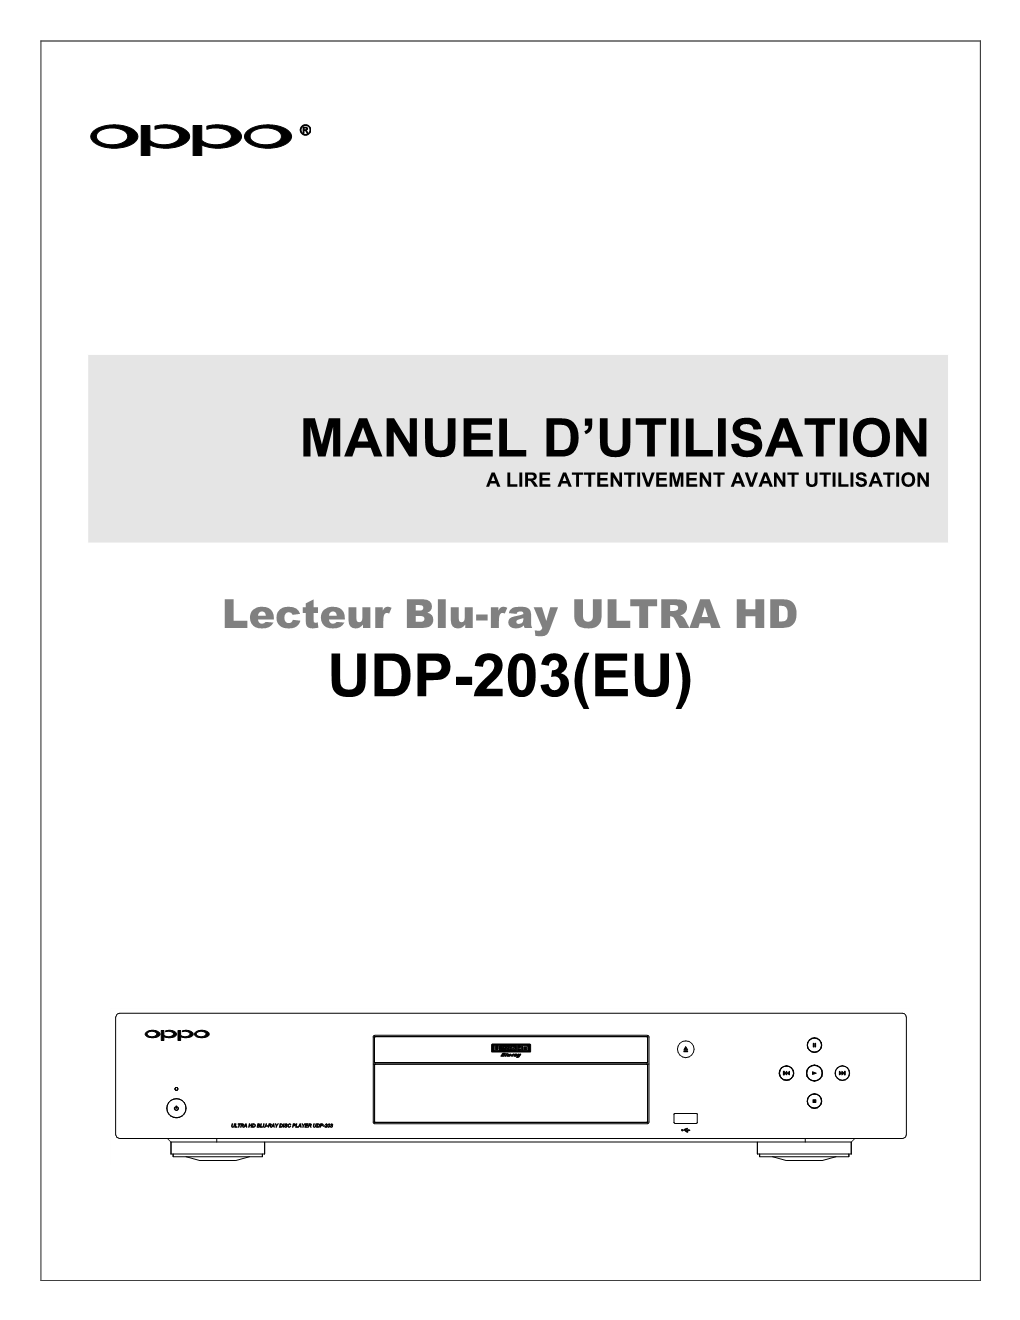 UDP-203 User Manual